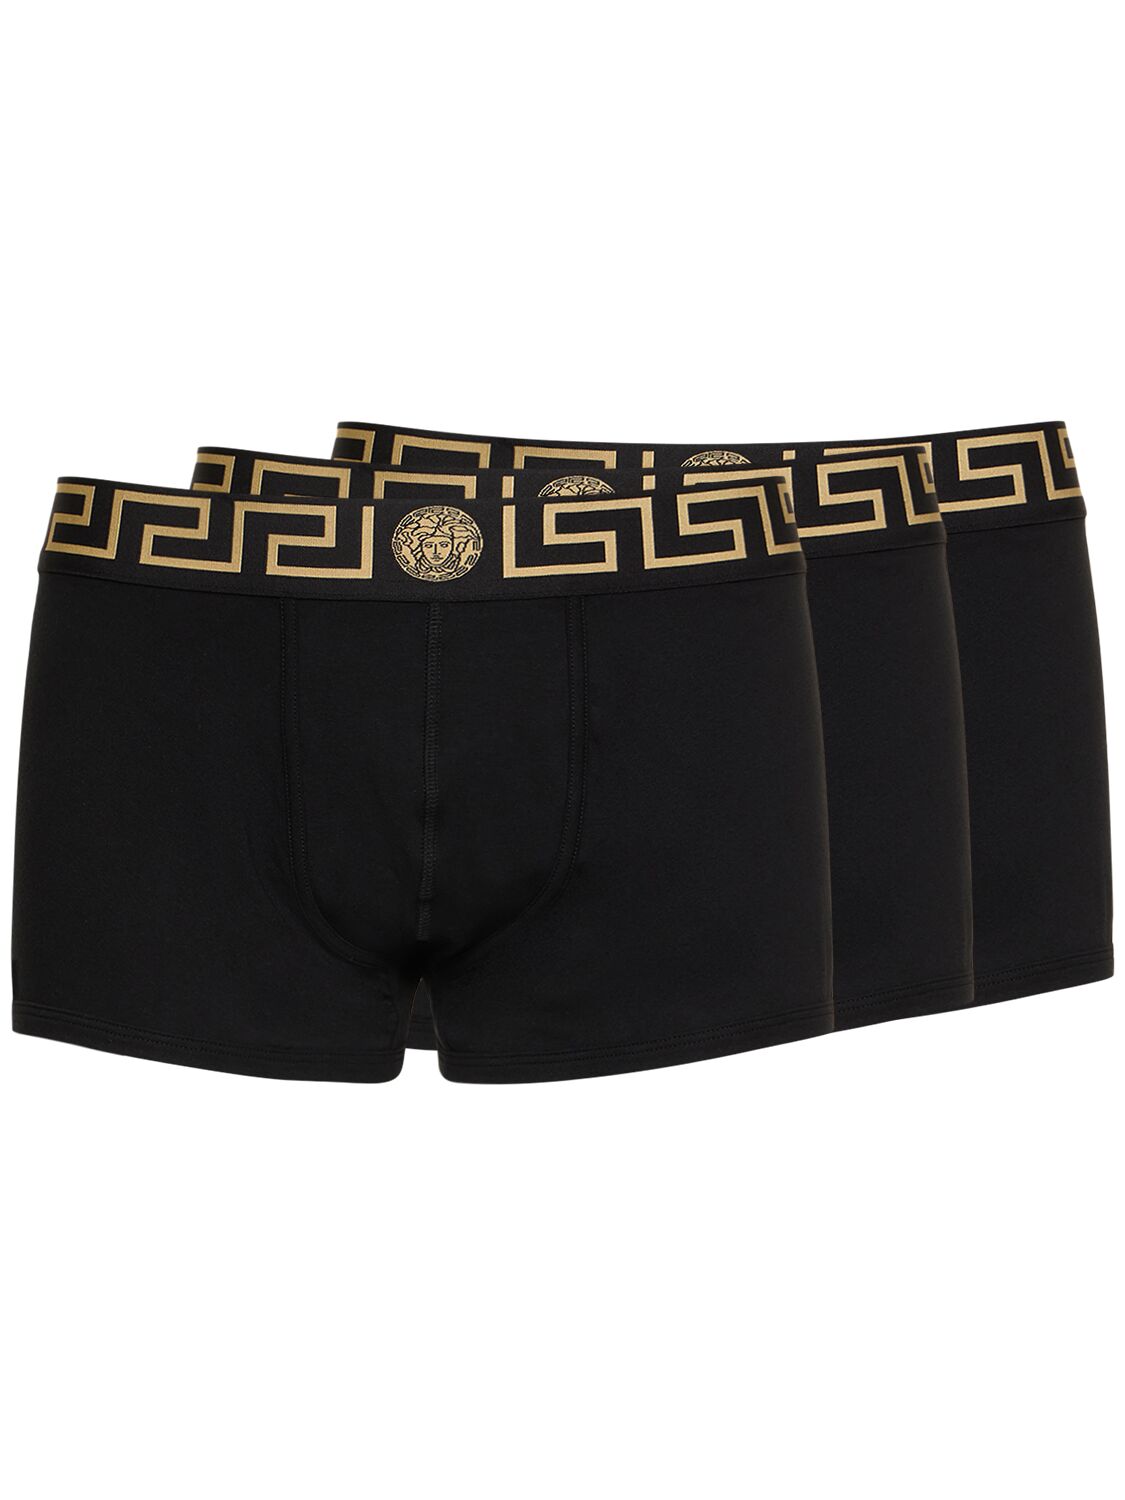 Versace Greca弹力棉质平角内裤3条套装 In Black,gold